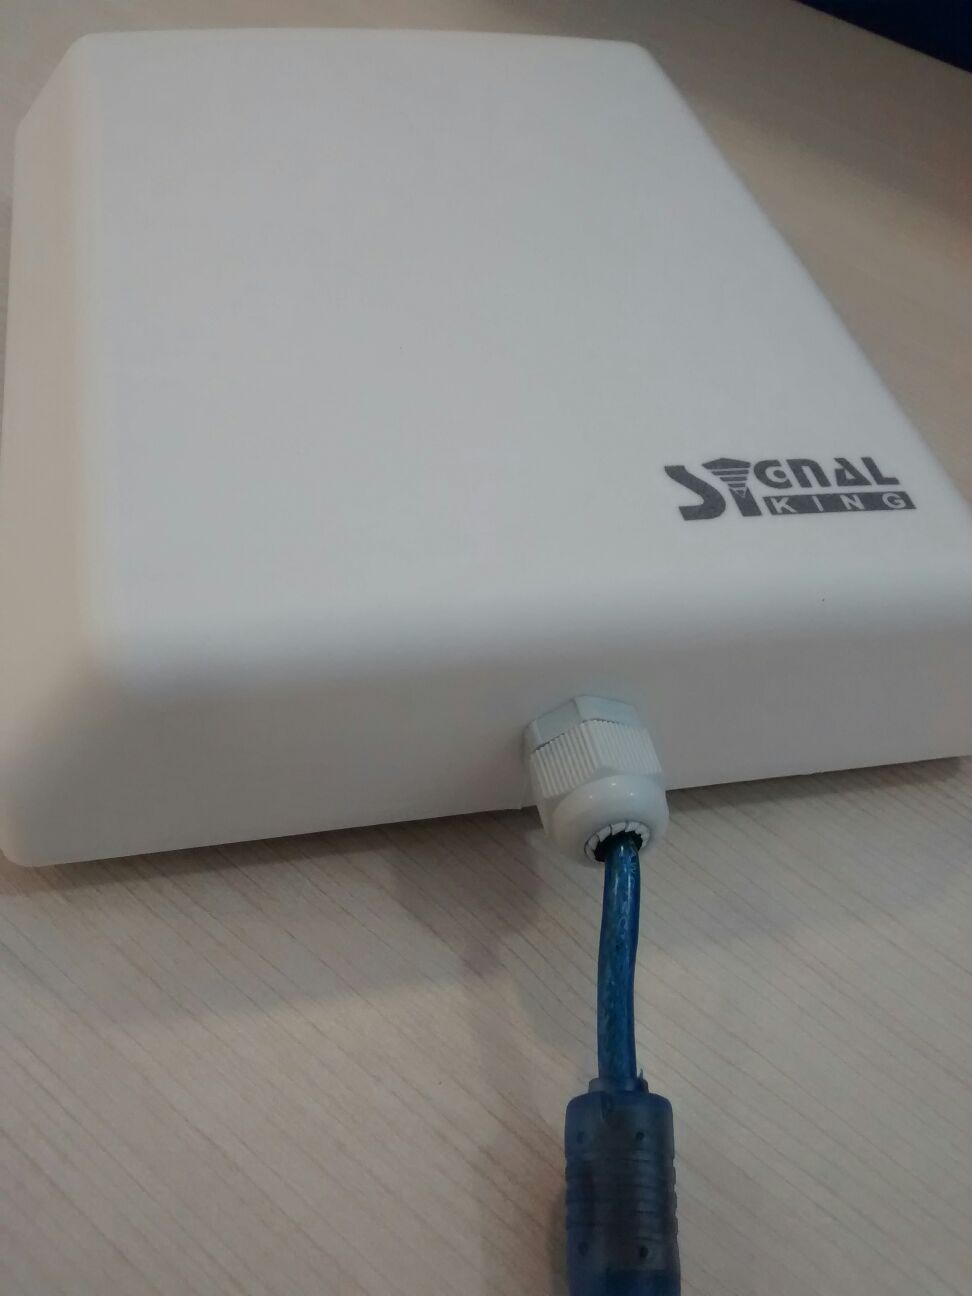 Signal King SK 10TN Antena WiFi USB largo alcance 10 metros con router alfa  r36